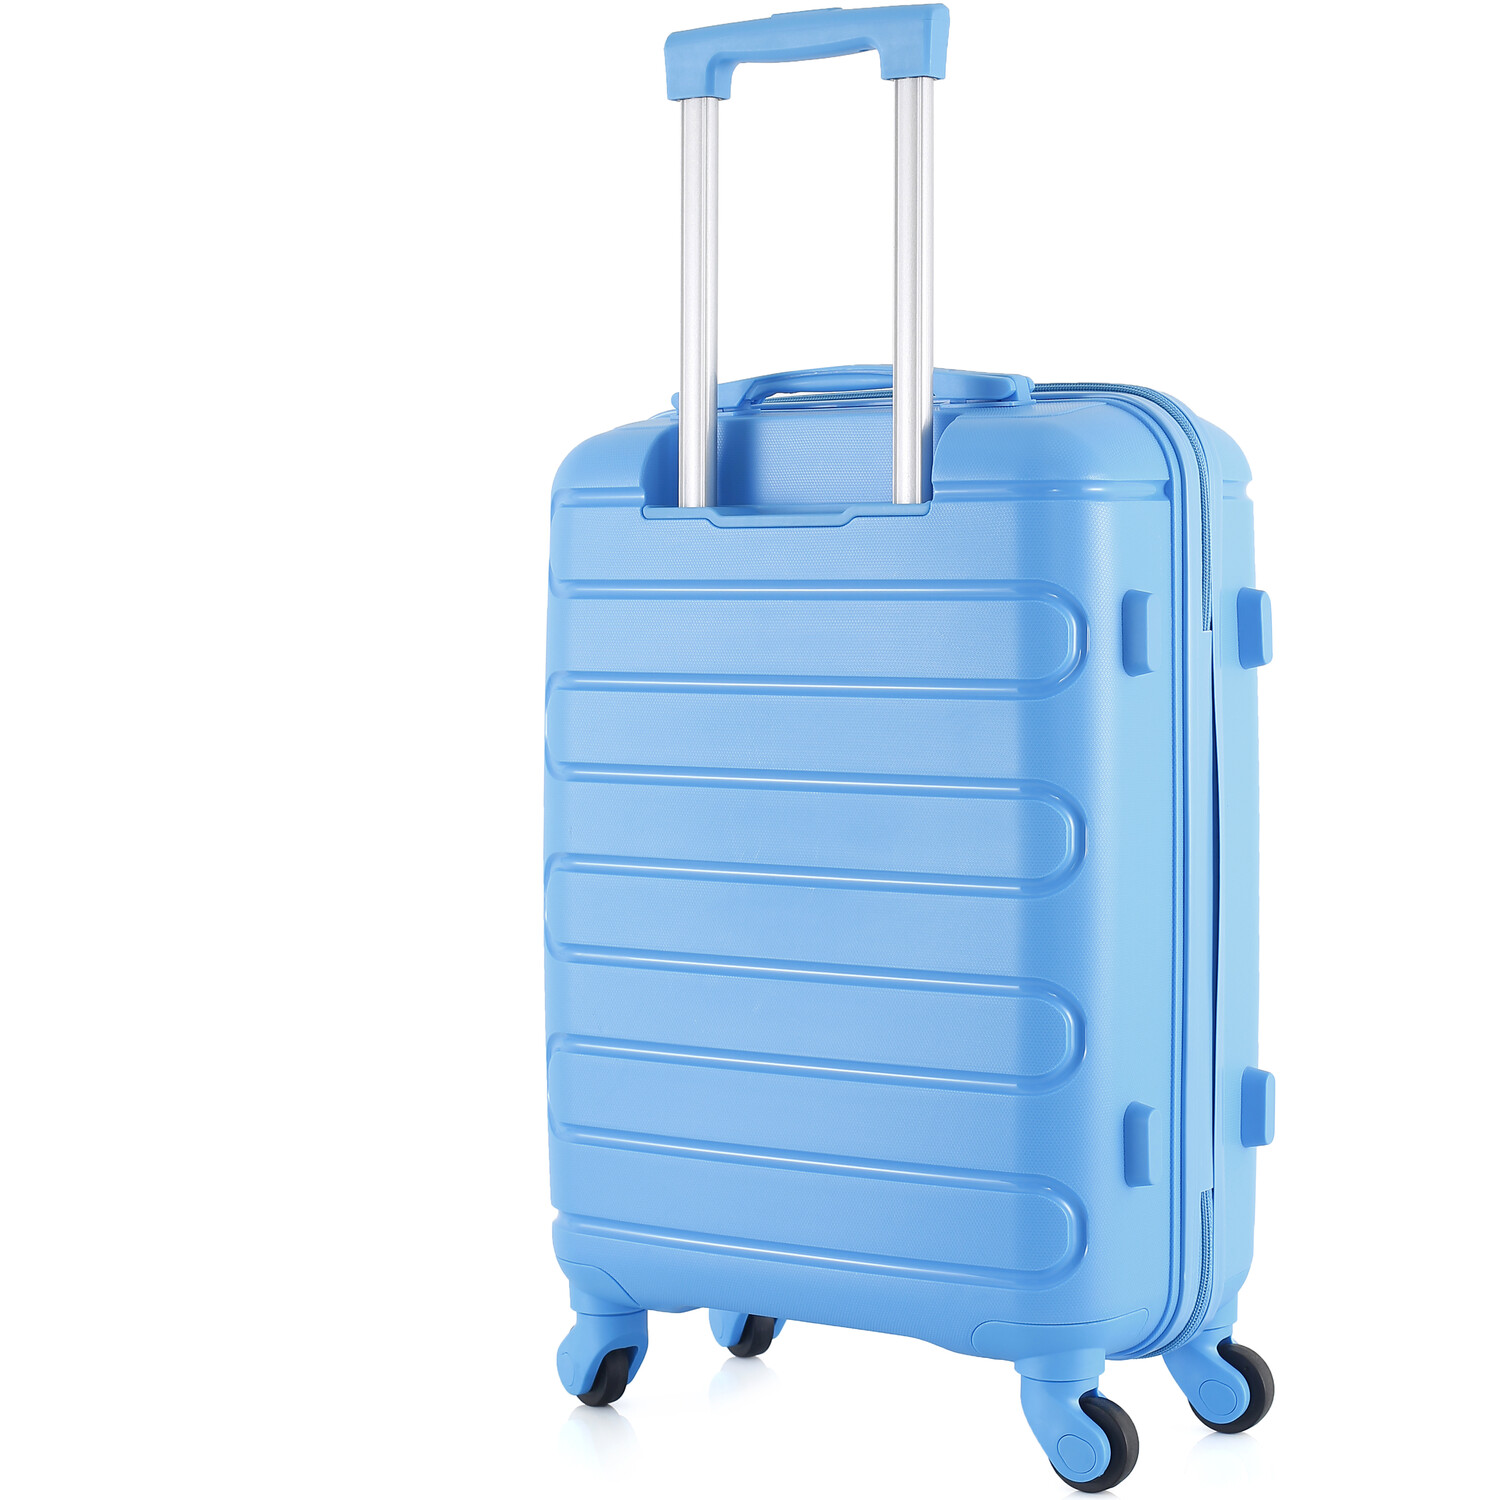 Swift Horizon Suitcase - Deep Teal / Cabin Case Image 3